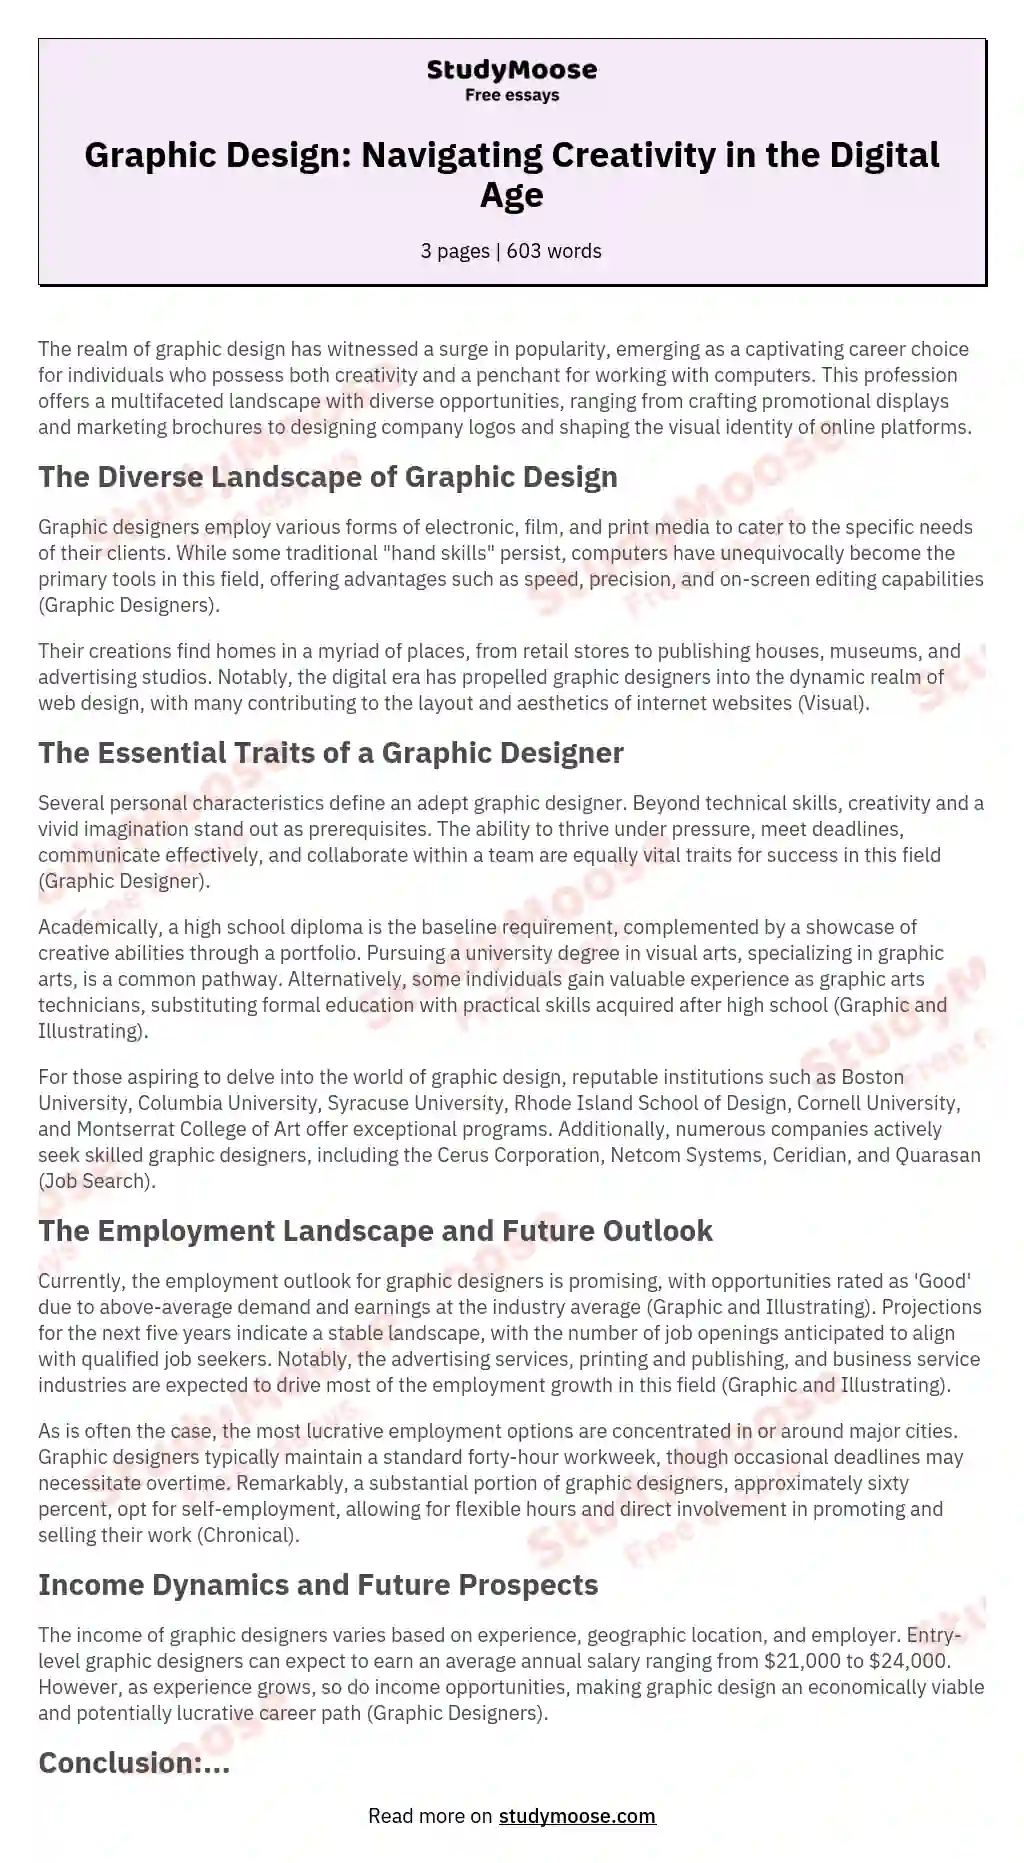 The Job of Graphic Designer